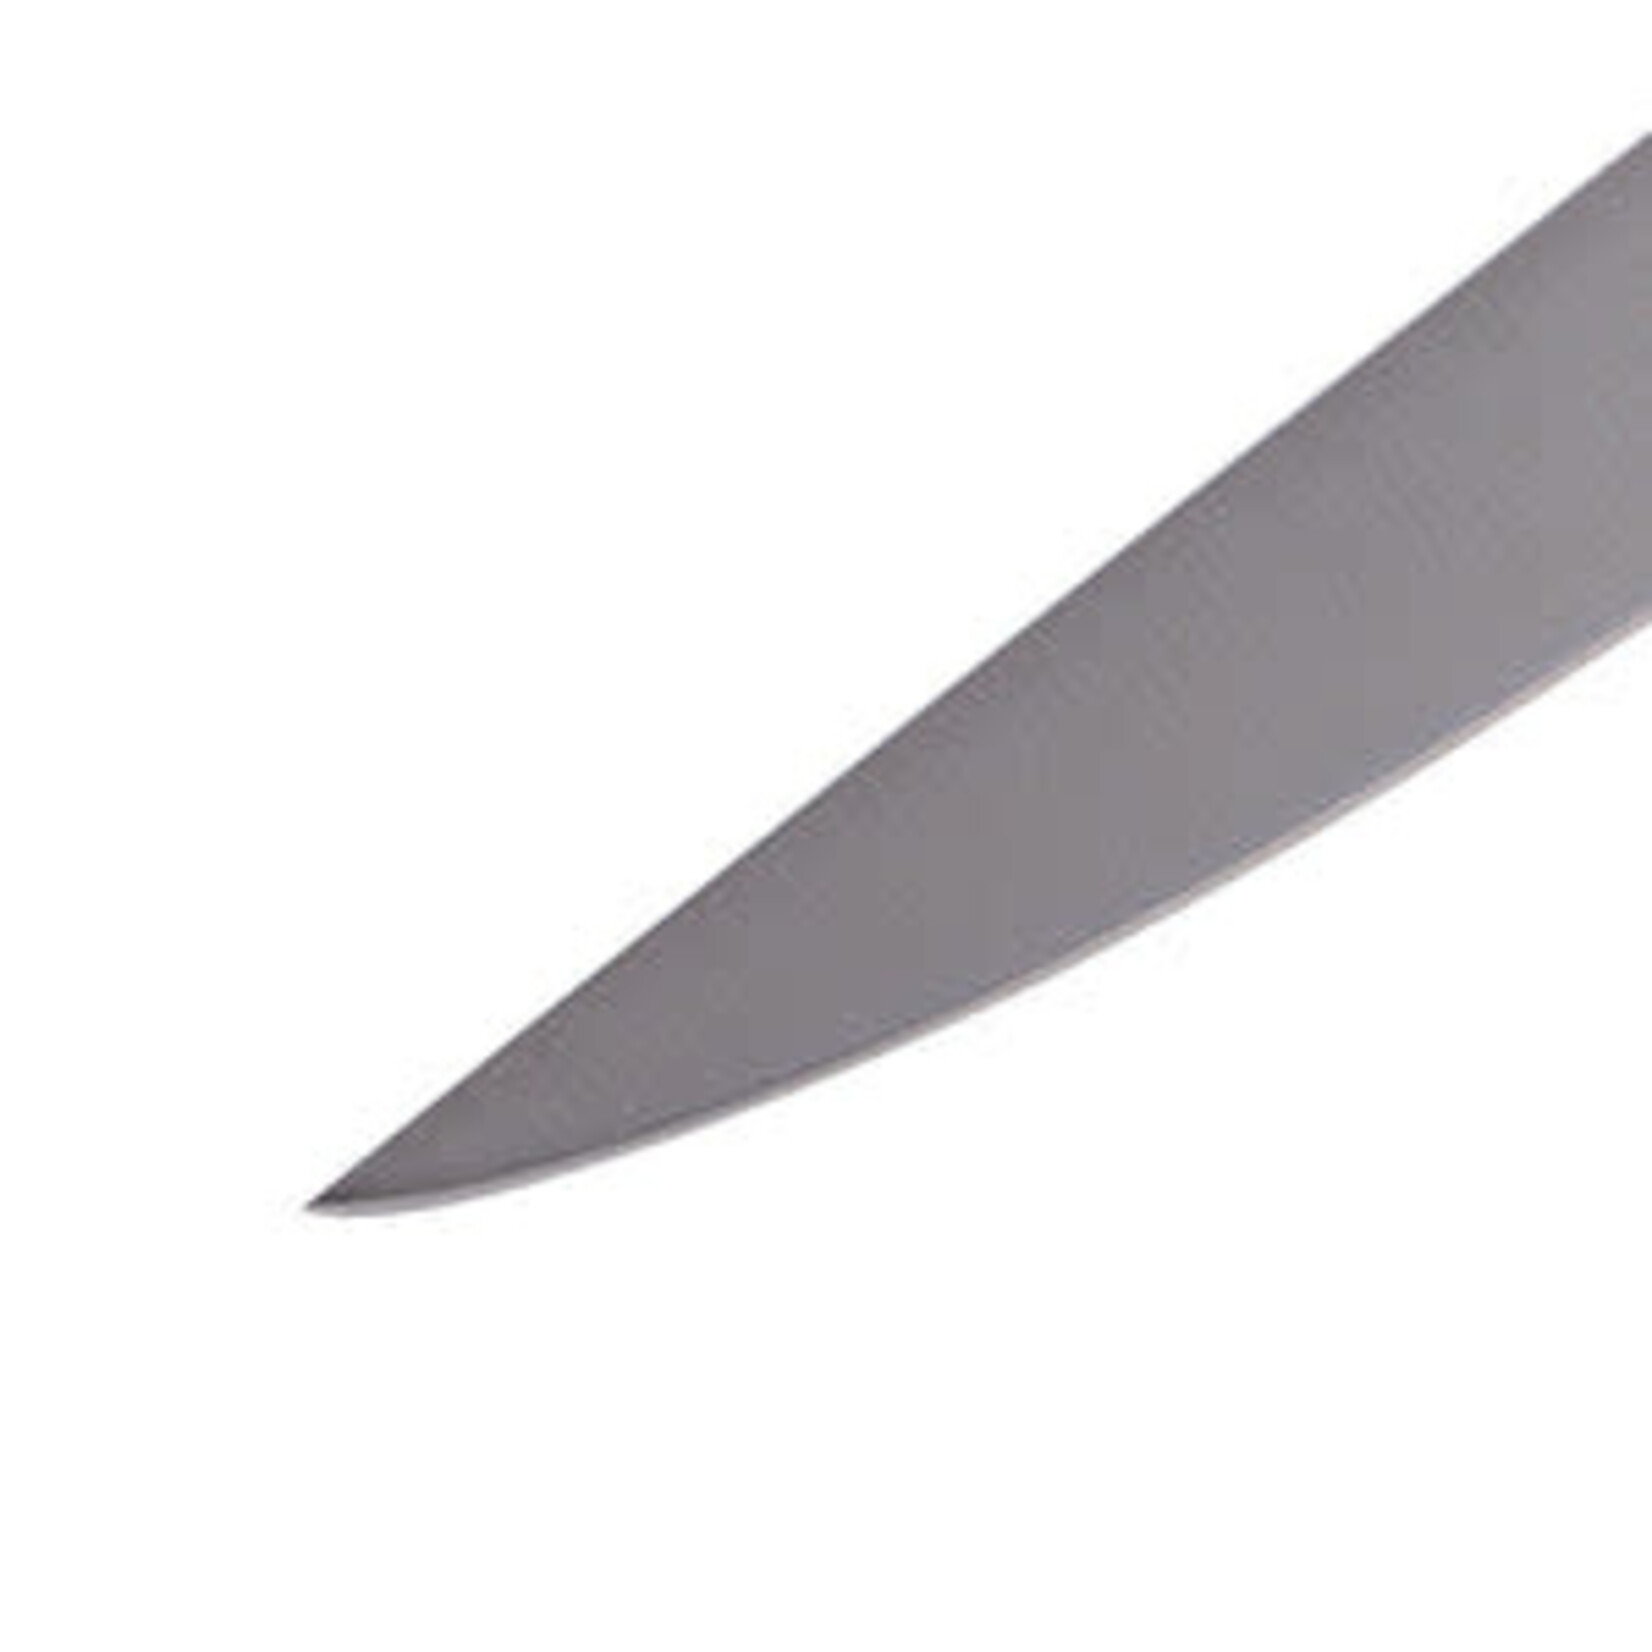 Messermeister Pro Series 6 Inch Flexible Fillet Knife with Polypropylene Handle